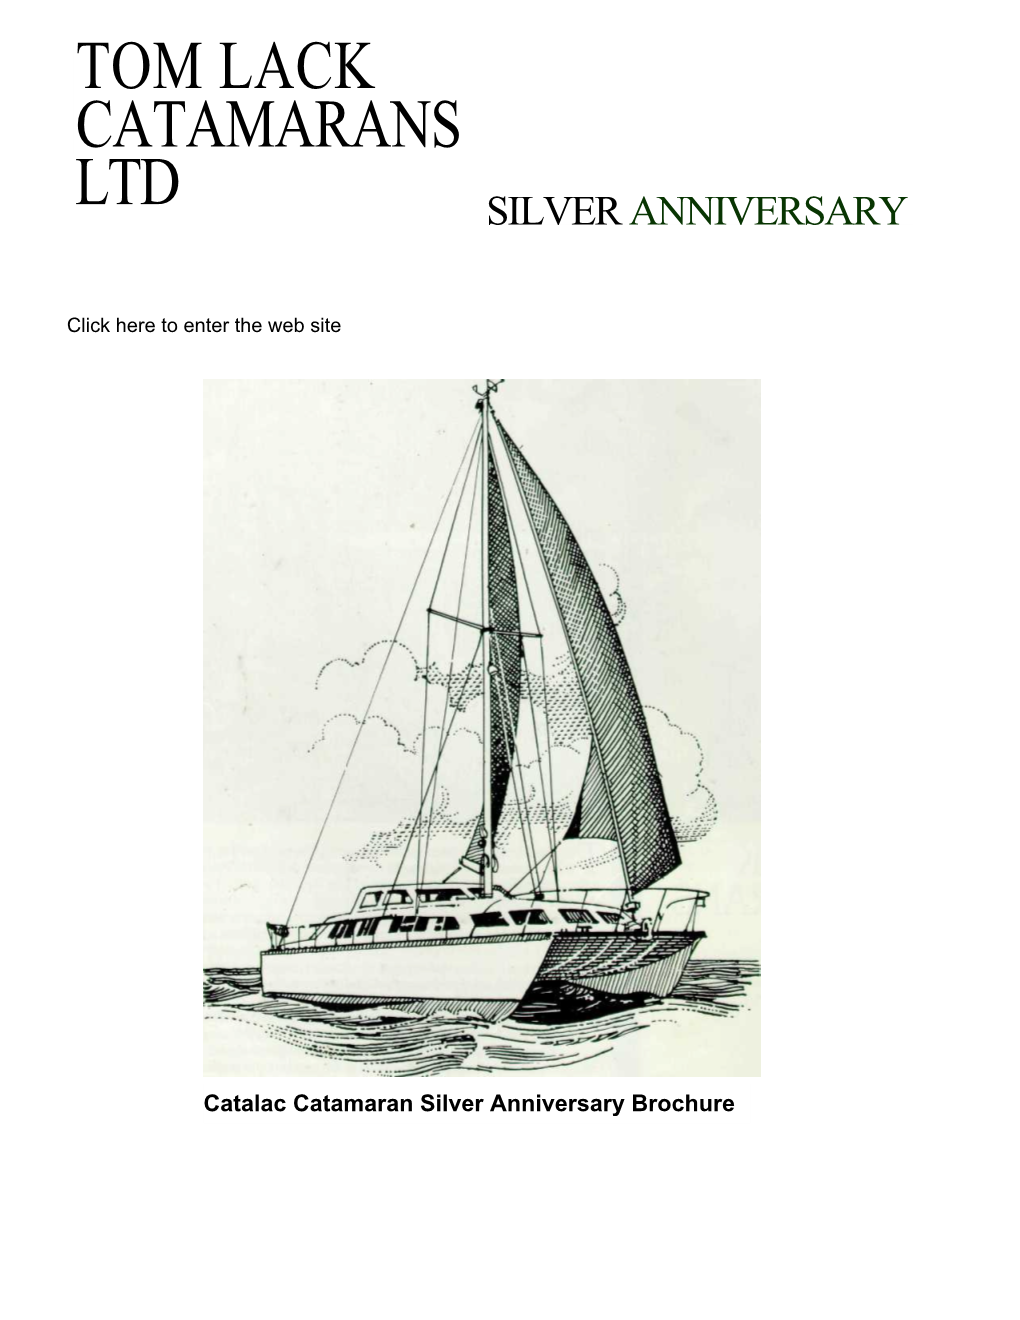 Catalac Catamaran Company Brochure